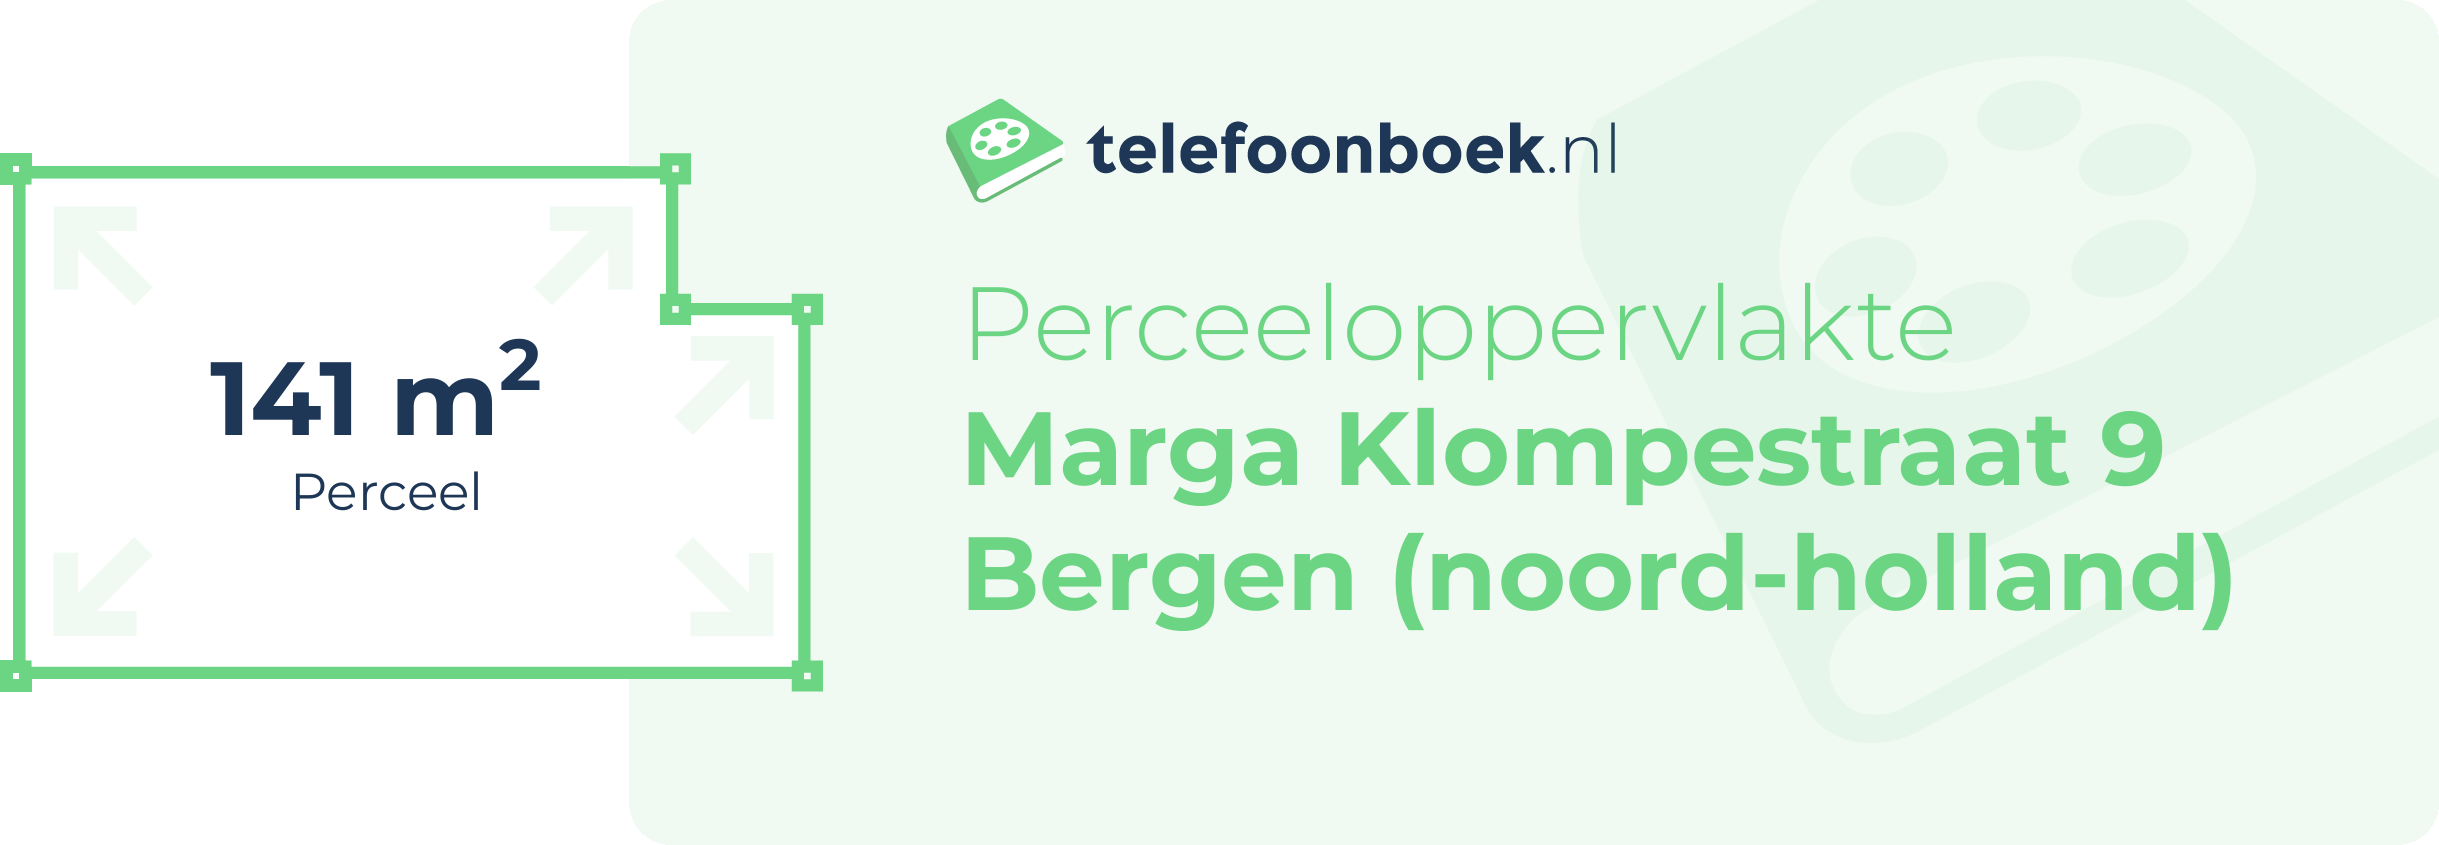 Perceeloppervlakte Marga Klompestraat 9 Bergen (Noord-Holland)